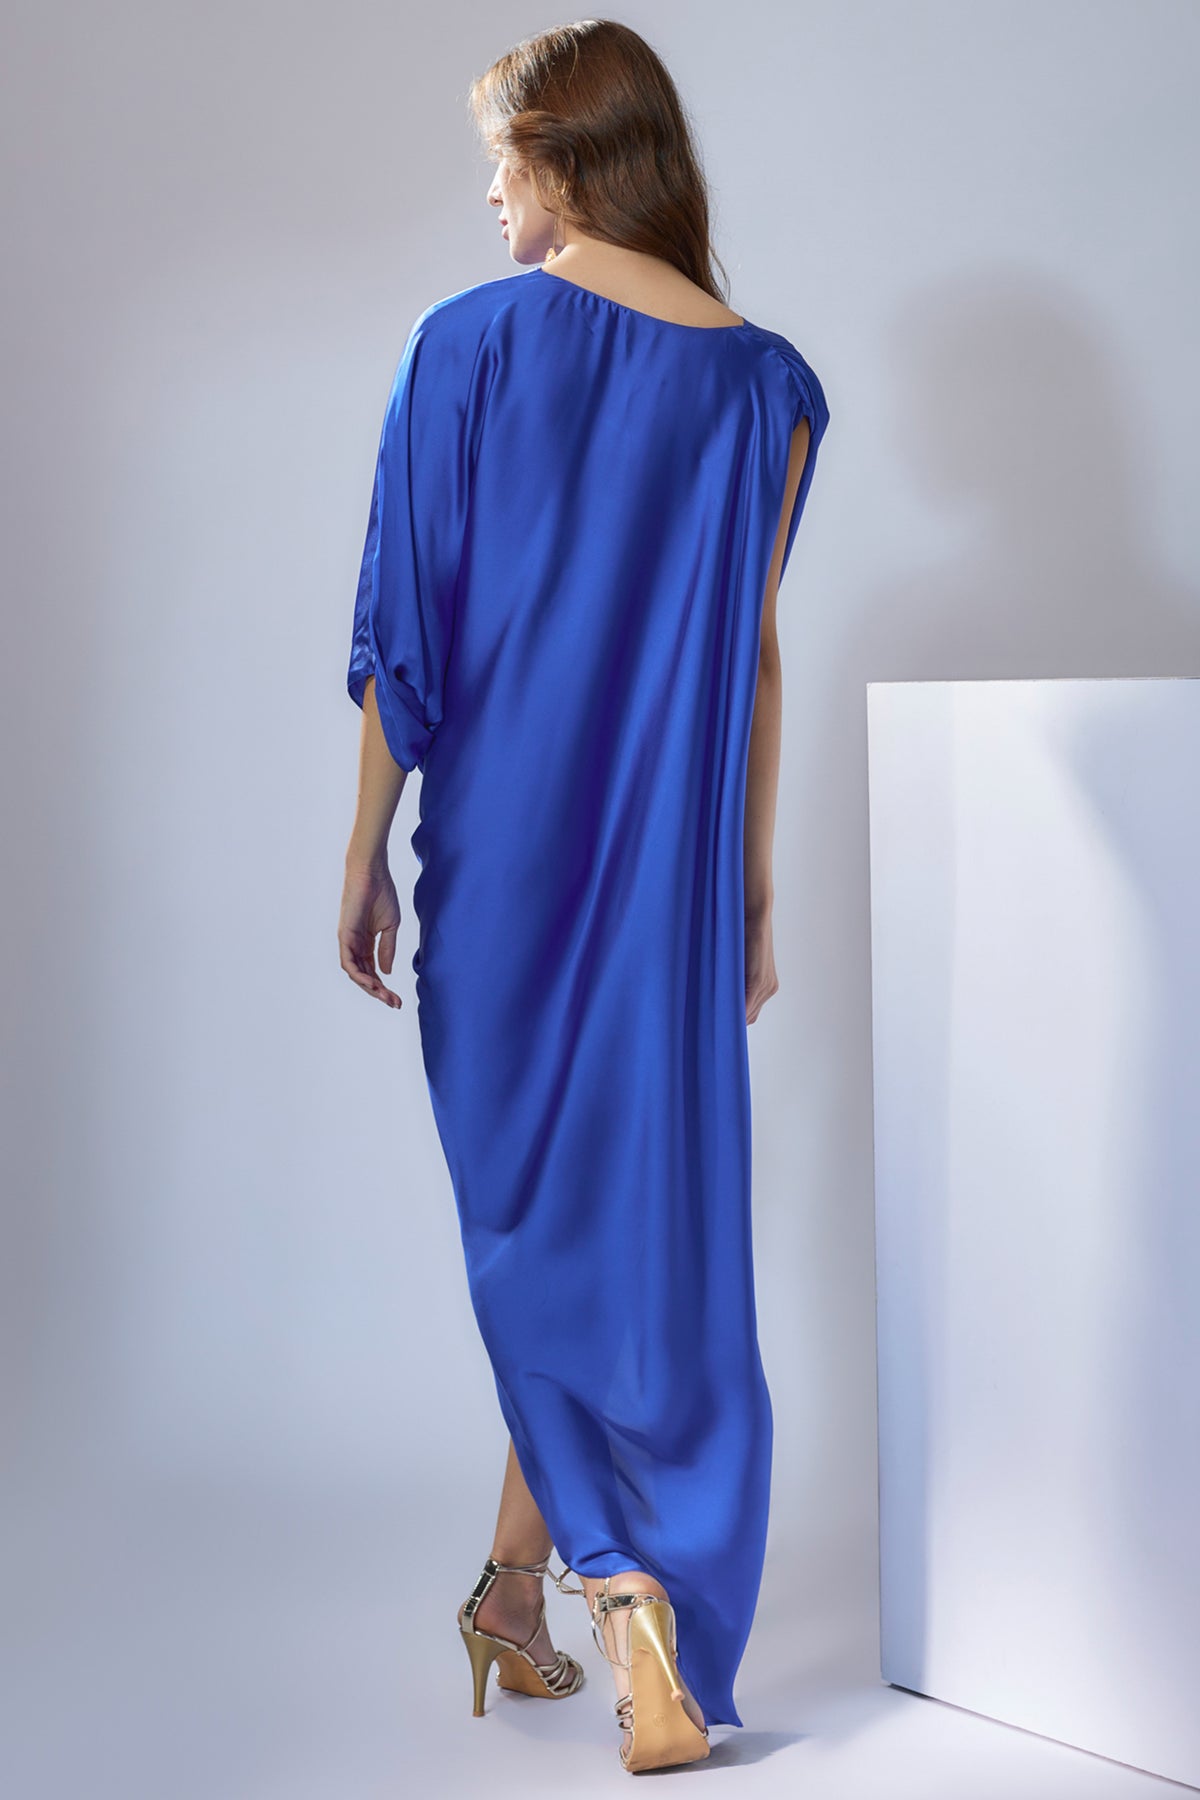 Electric Blue Drape Dress